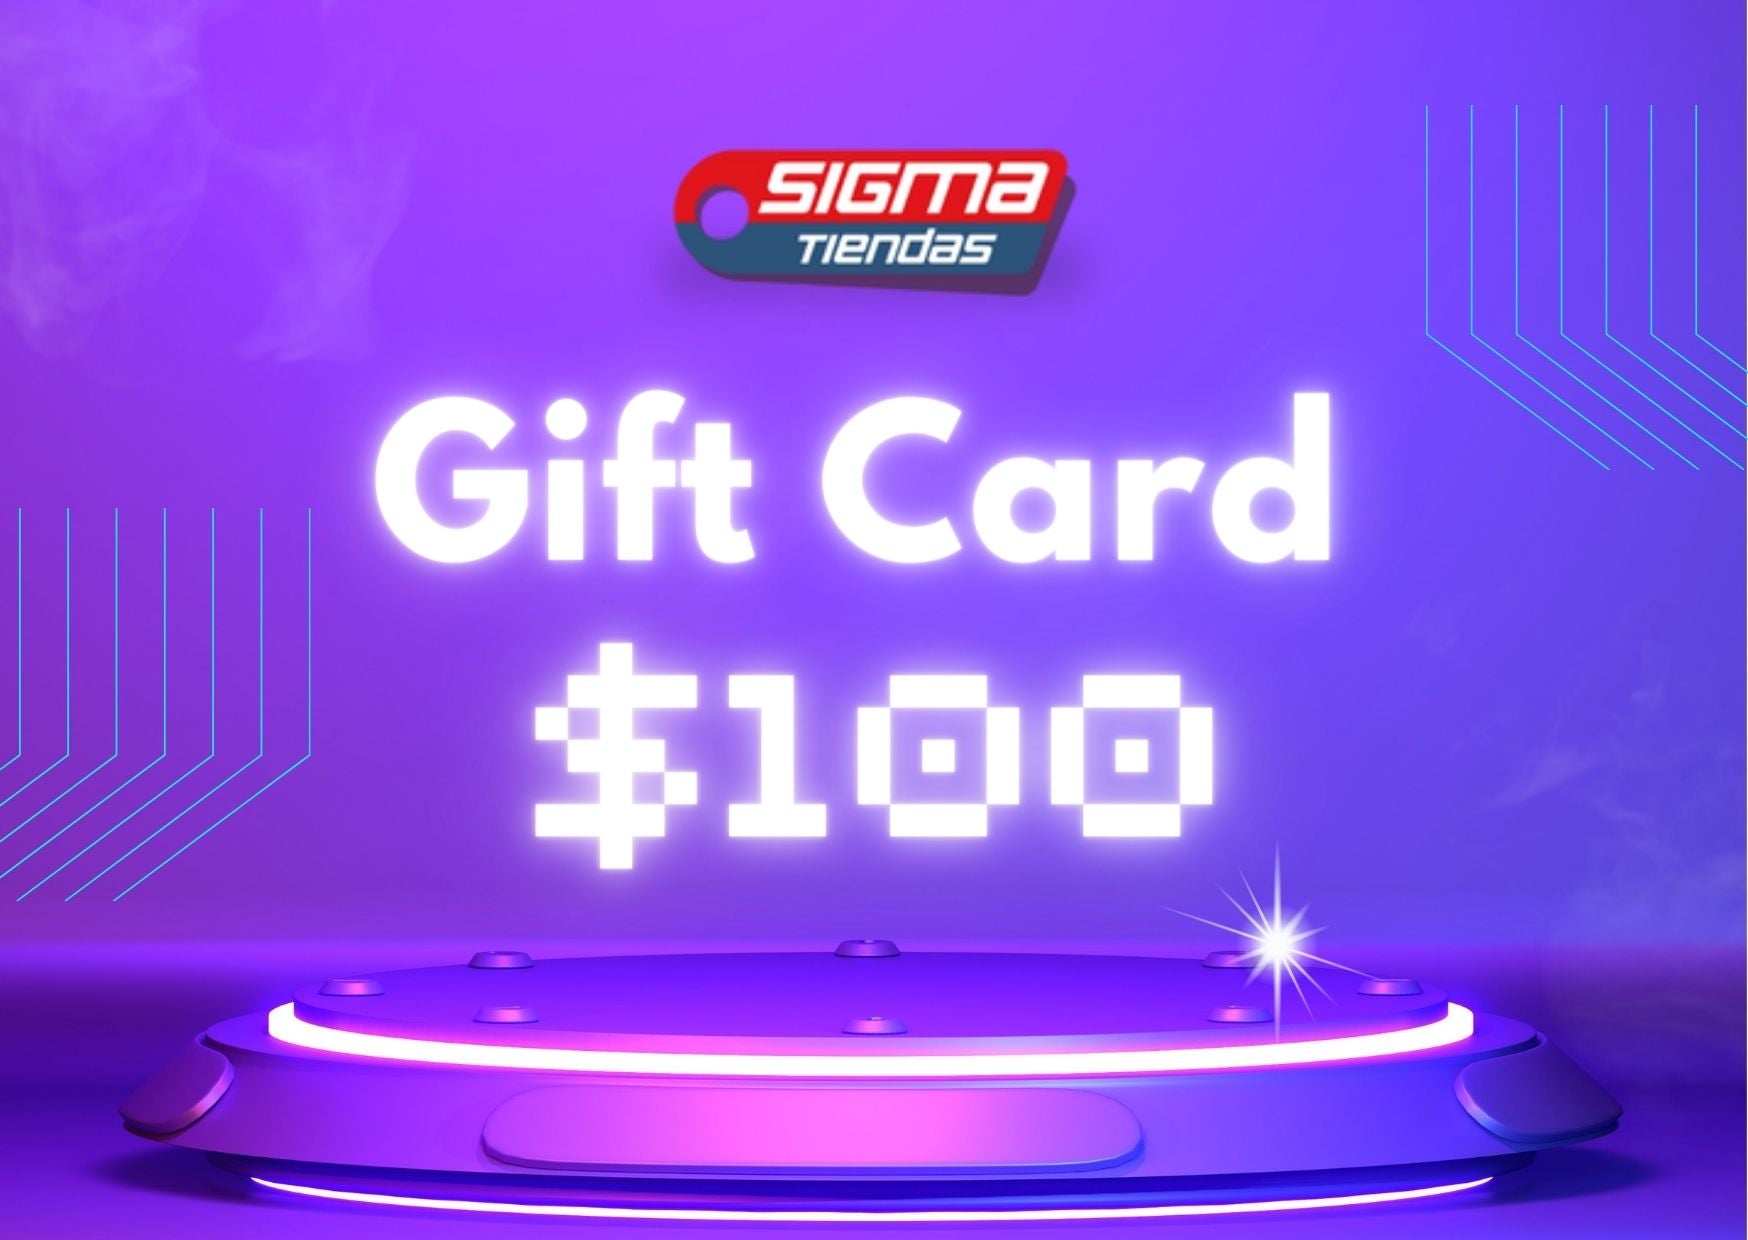 Gift Card Sigma $100